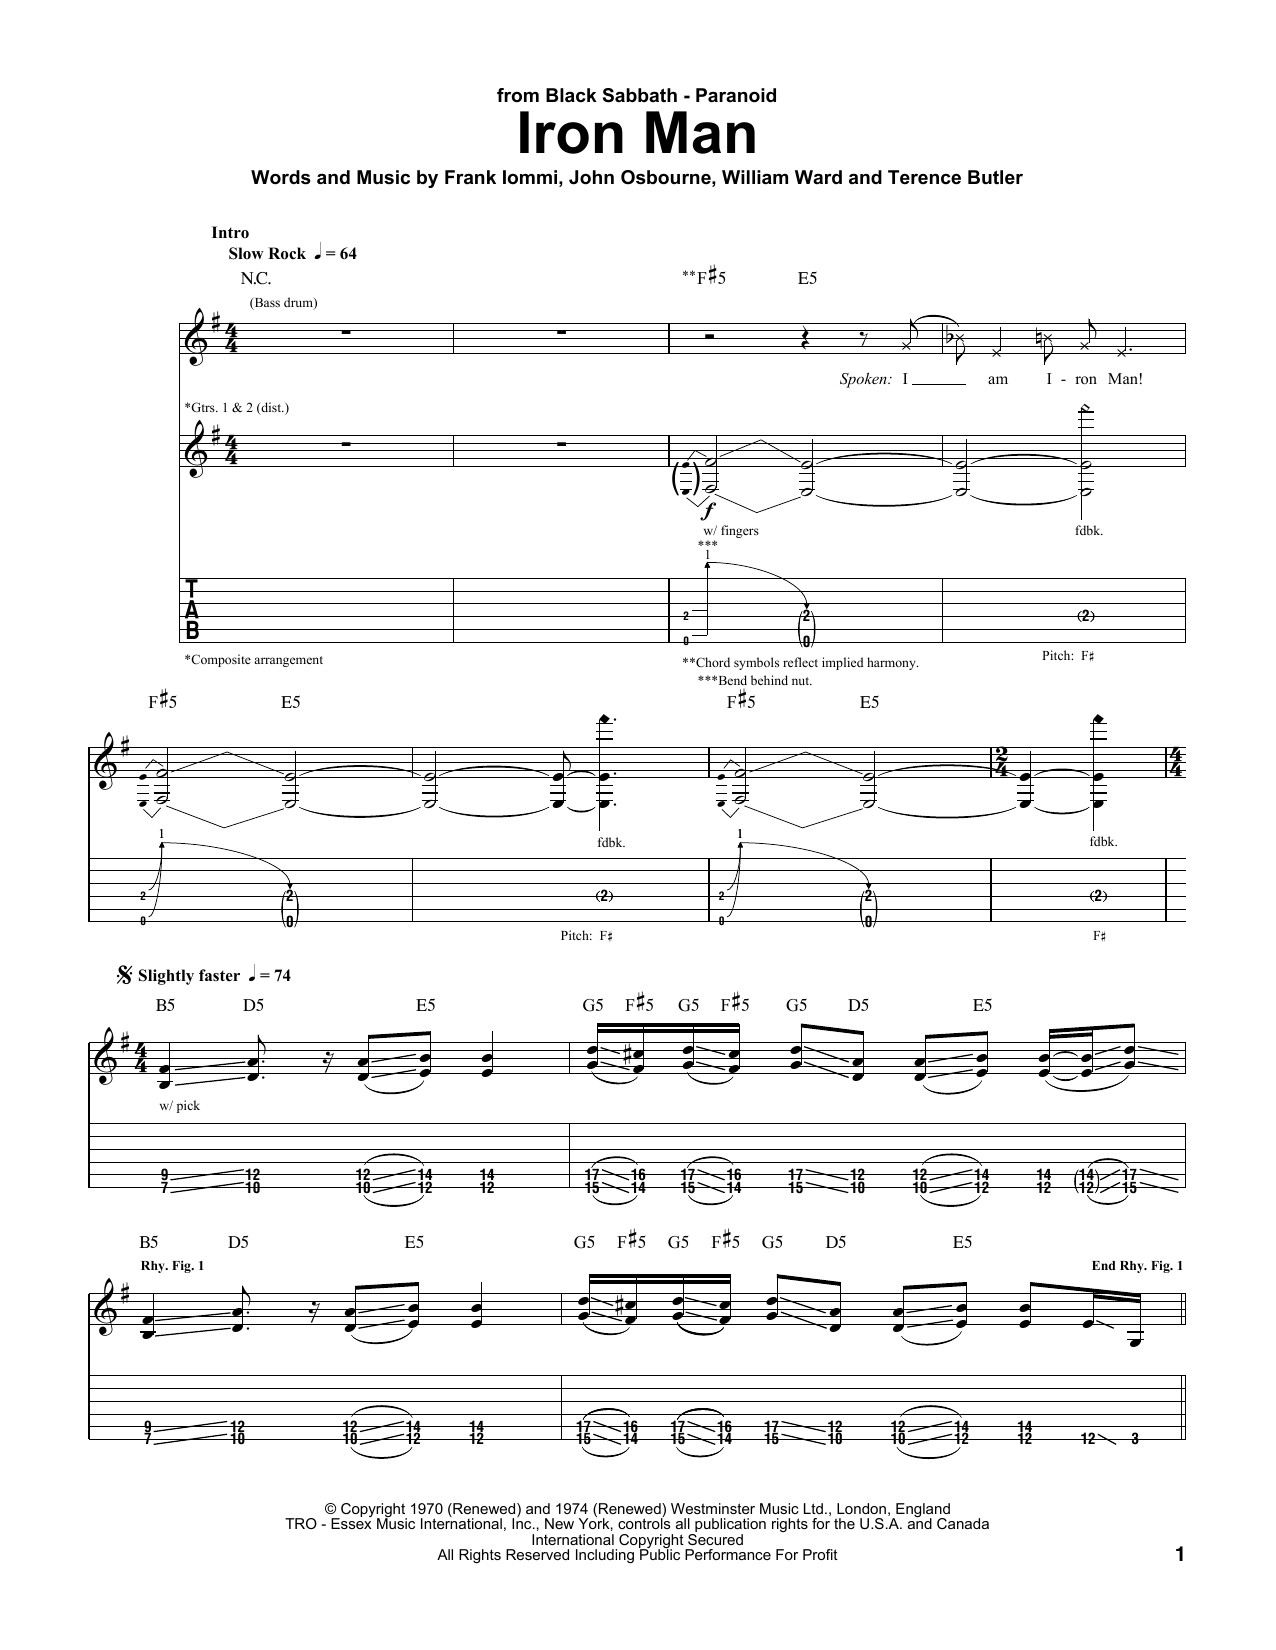 Black Sabbath Iron Man Sheet Music Notes & Chords for Easy Piano - Download or Print PDF